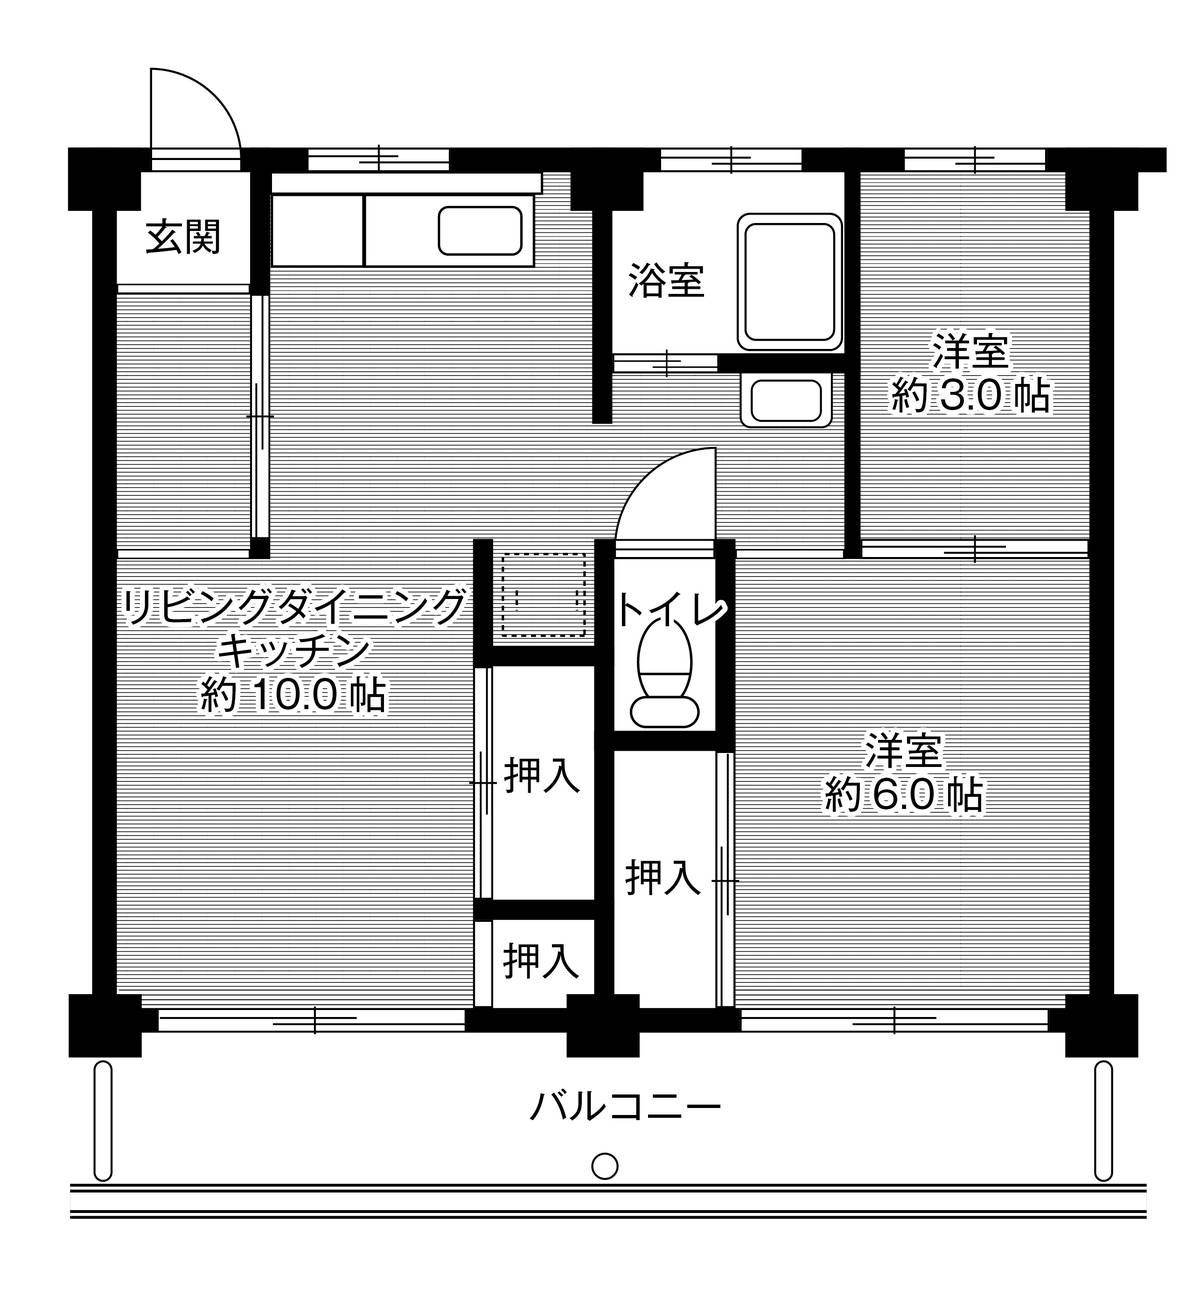 2LDK floorplan of Village House Haguro in Inuyama-shi